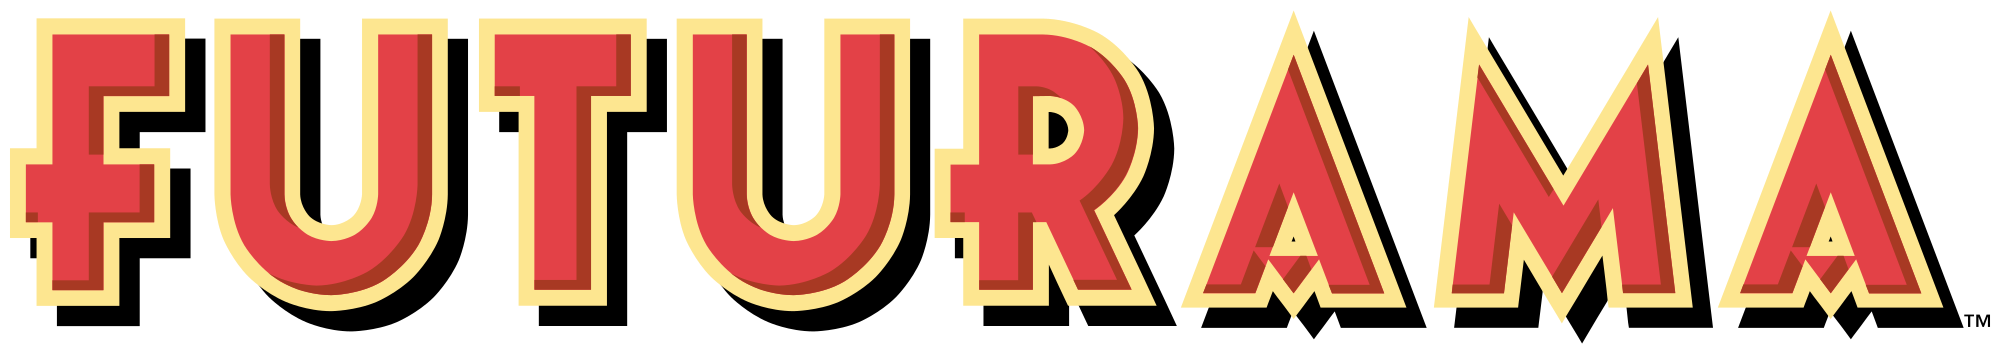 Futurama Logo PNG Image Background